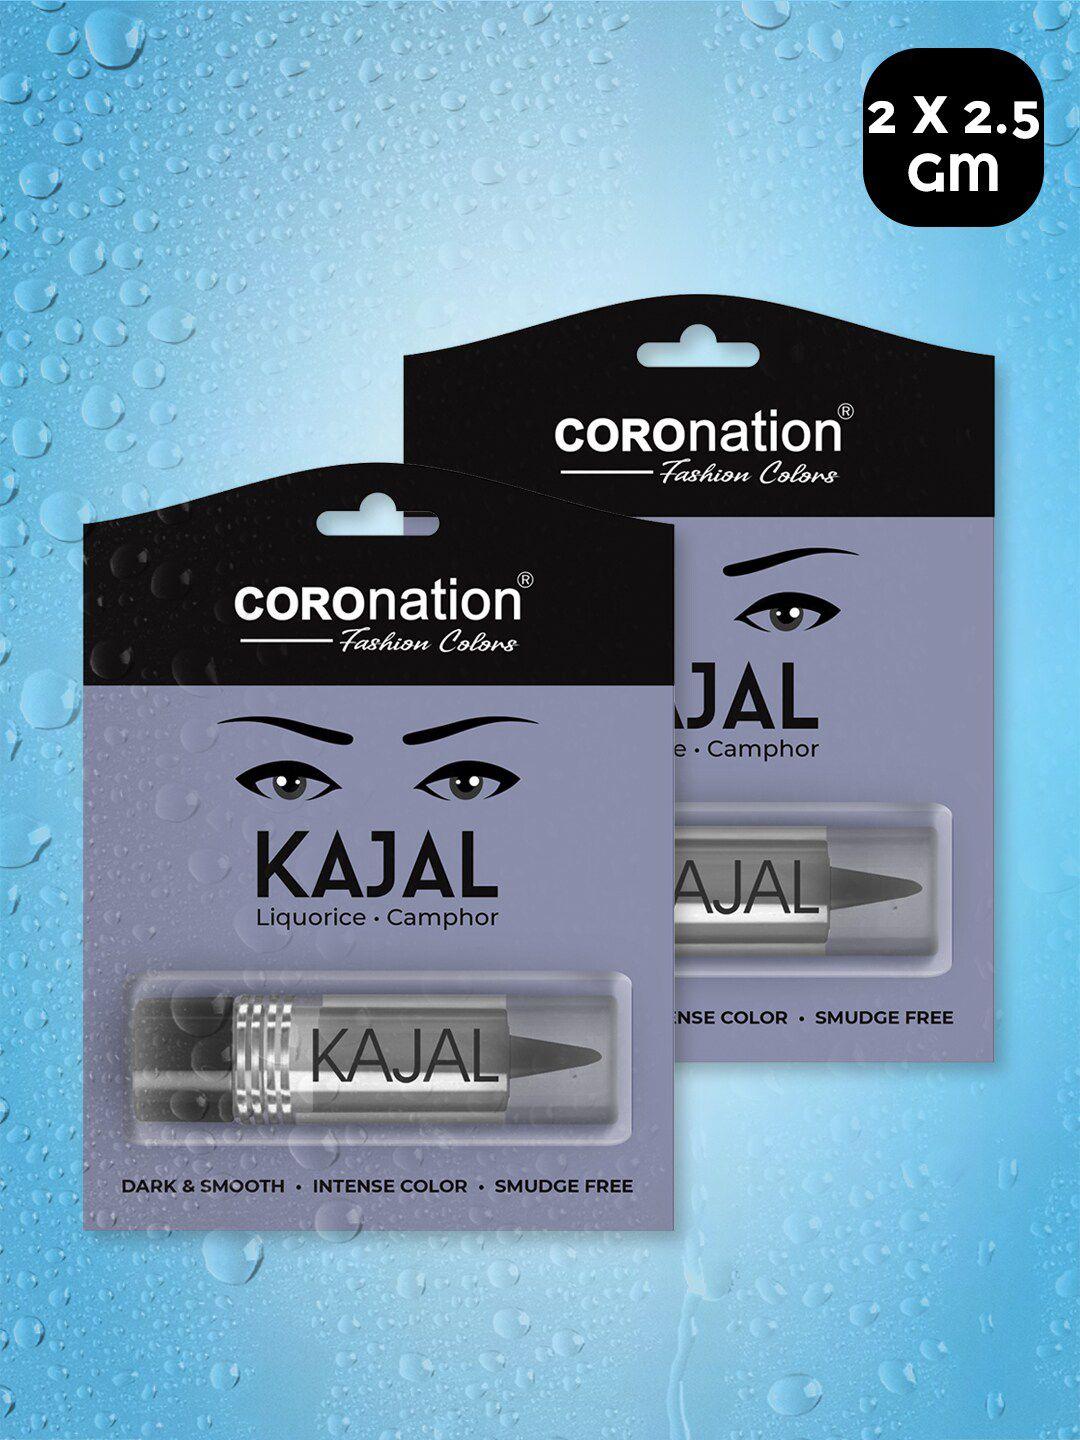 coronation herbal set of 2 dark & smooth kajal with liquorice & camphor 2.5g each - black